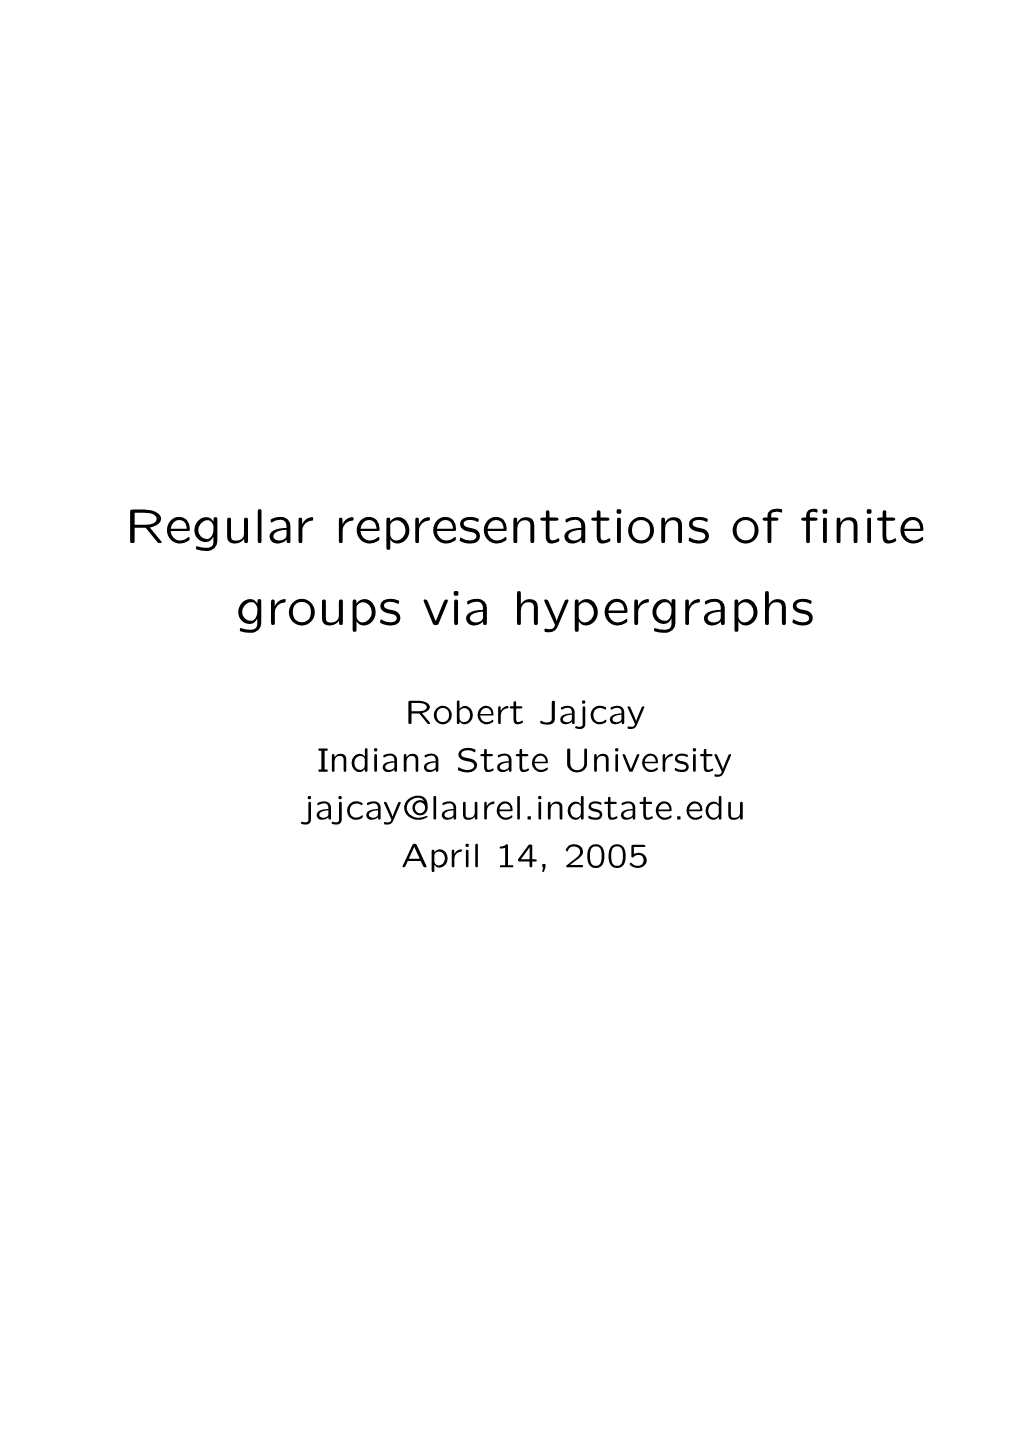 Regular Representations of Finite Groups Via Hypergraphs